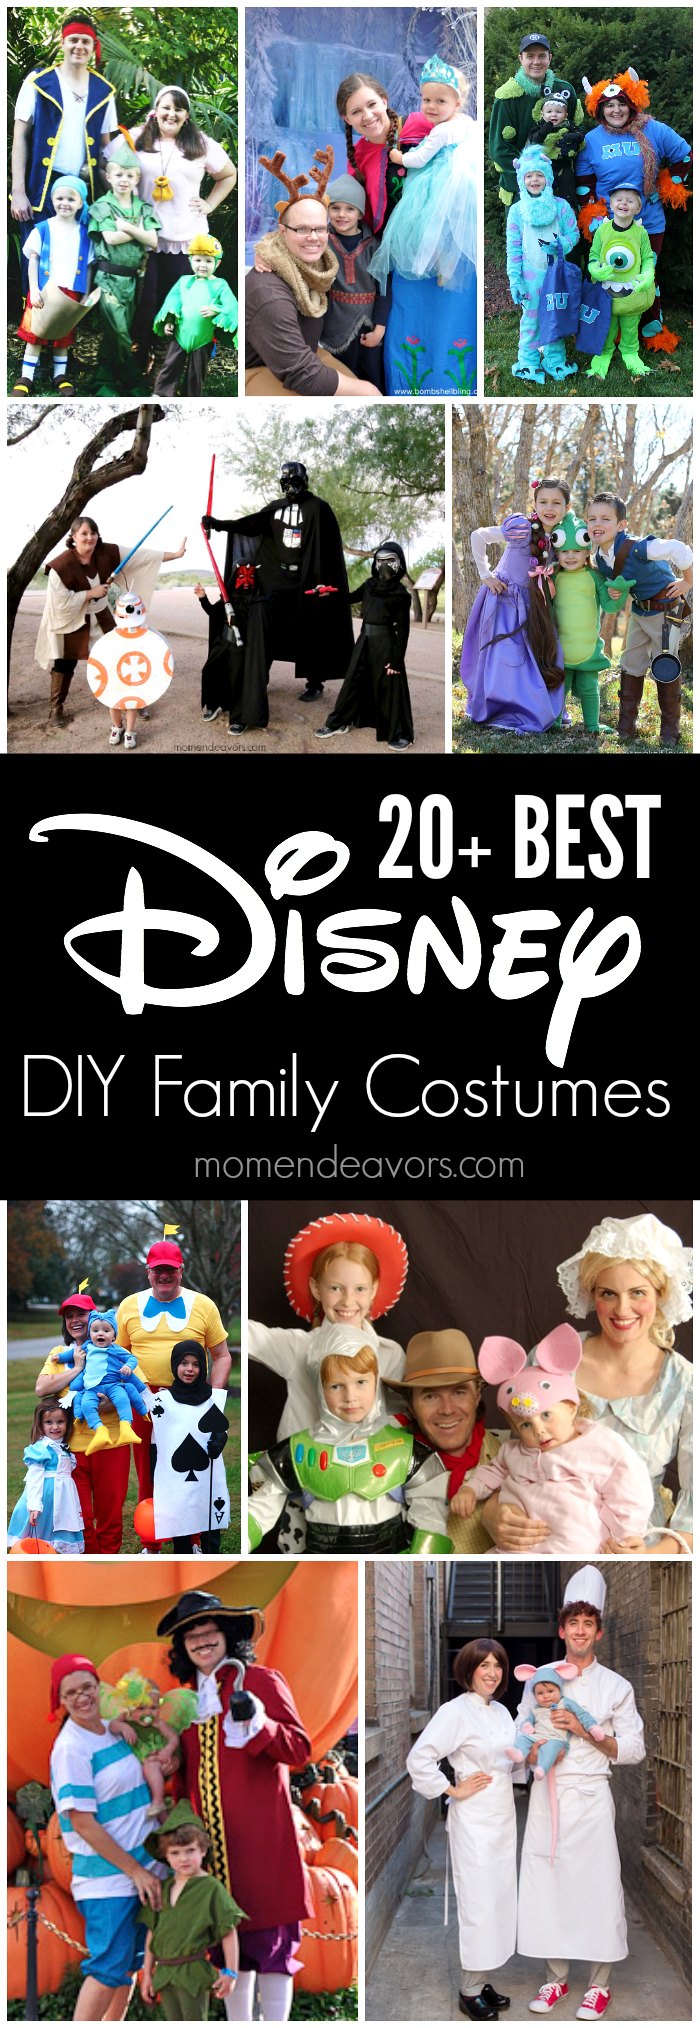 20+ Best Disney DIY Family Costumes